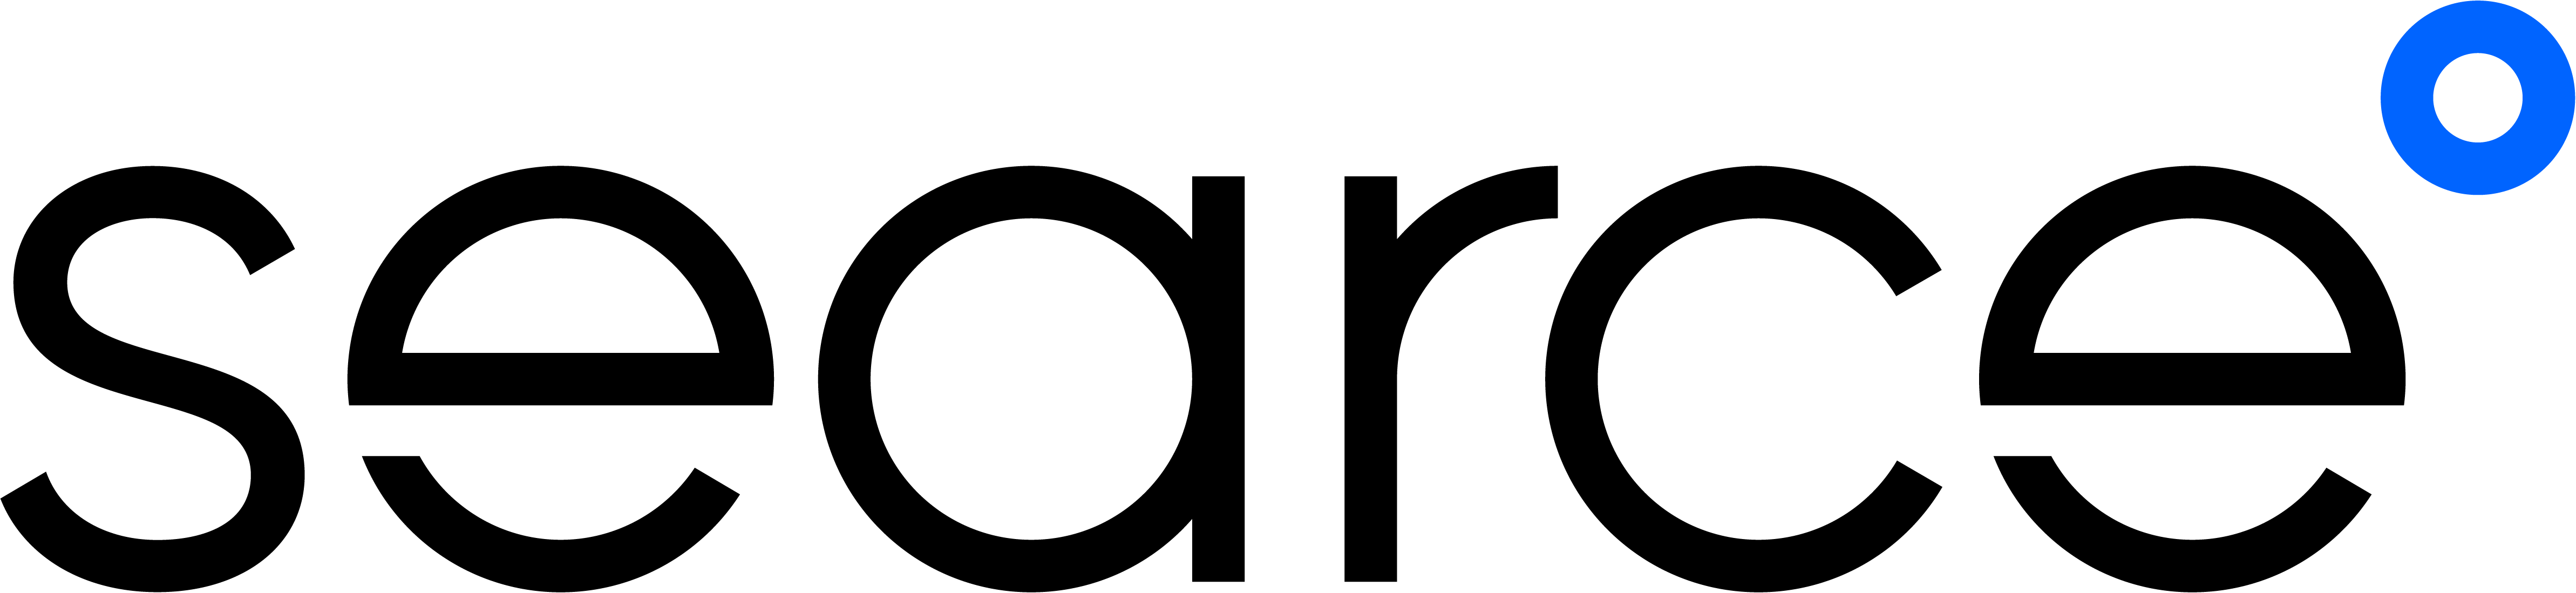 Logotipo da Searce